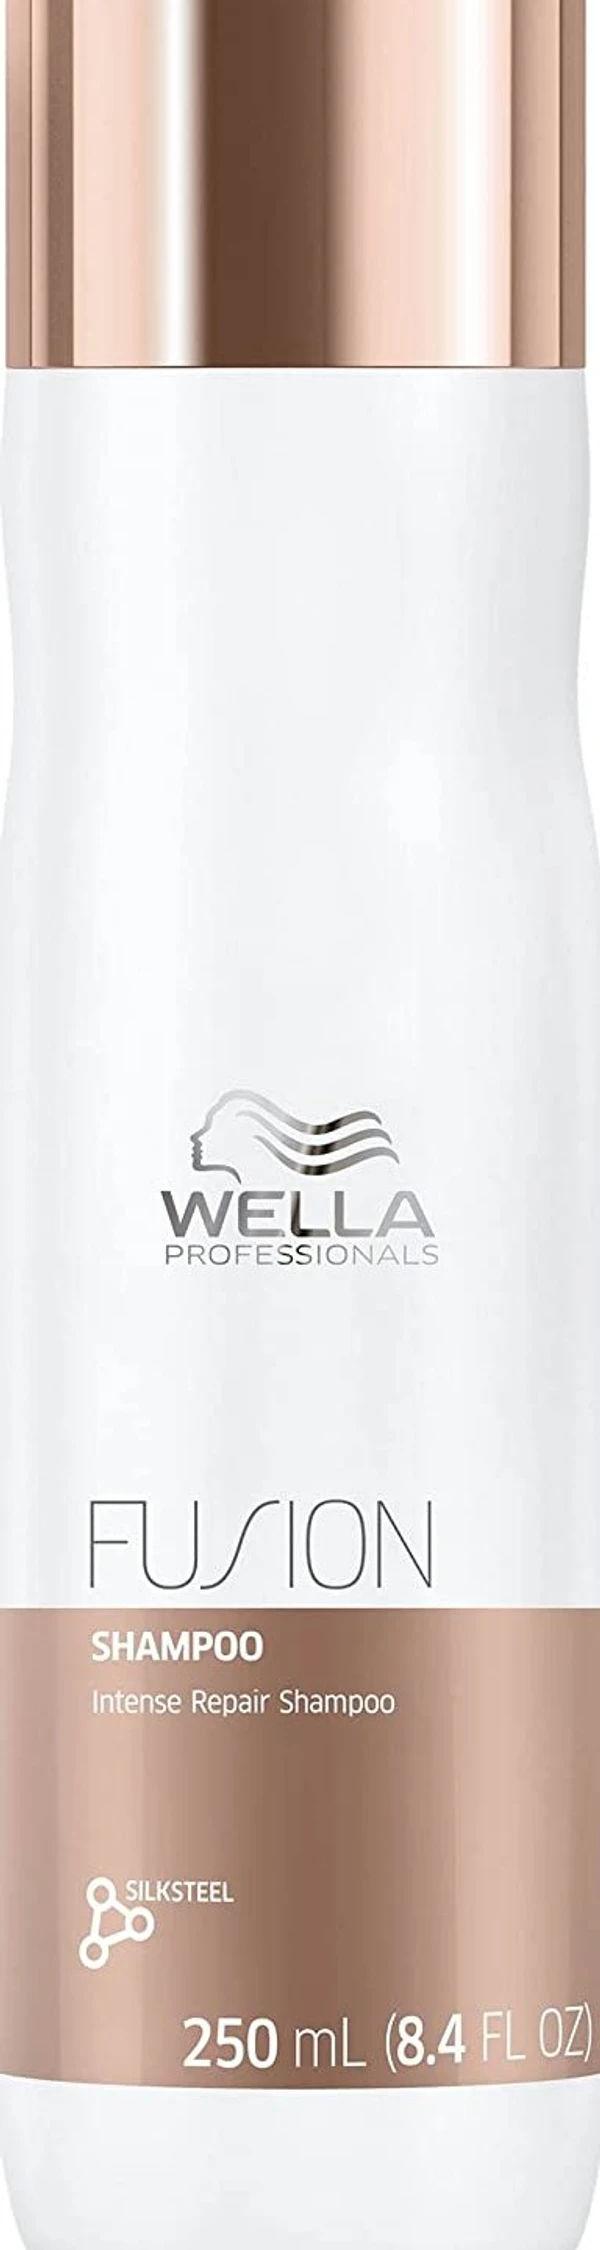 Wella Fusion Intense Repair Shampoo Wella Professionals Fusion Intense Repair Shampoo 250 ml